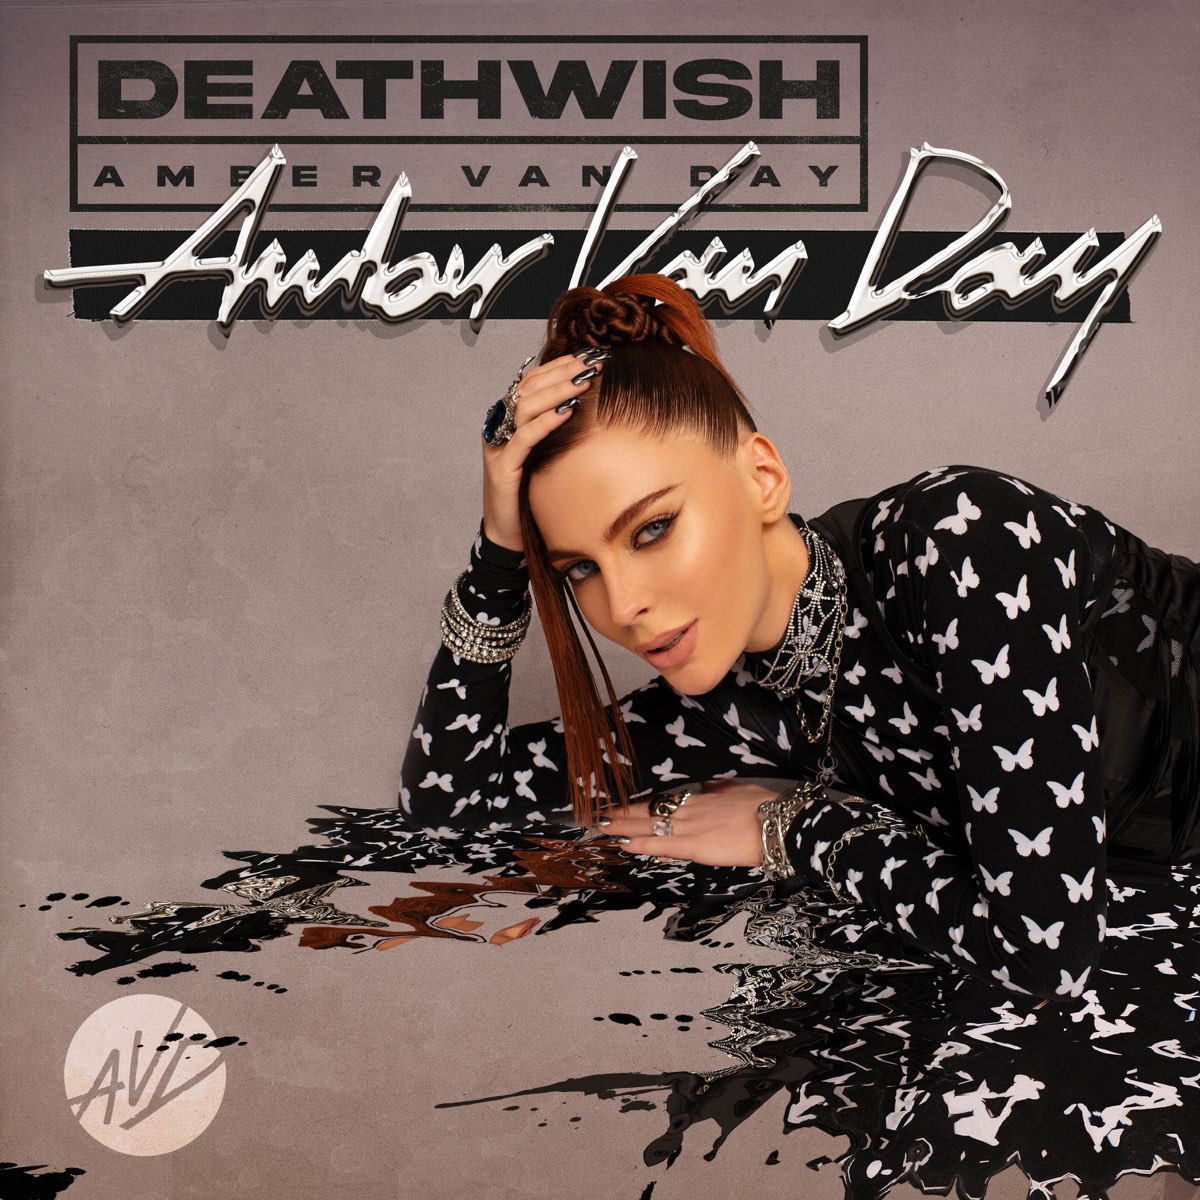 Deathwish - Single by Amber Van Day on Apple Music